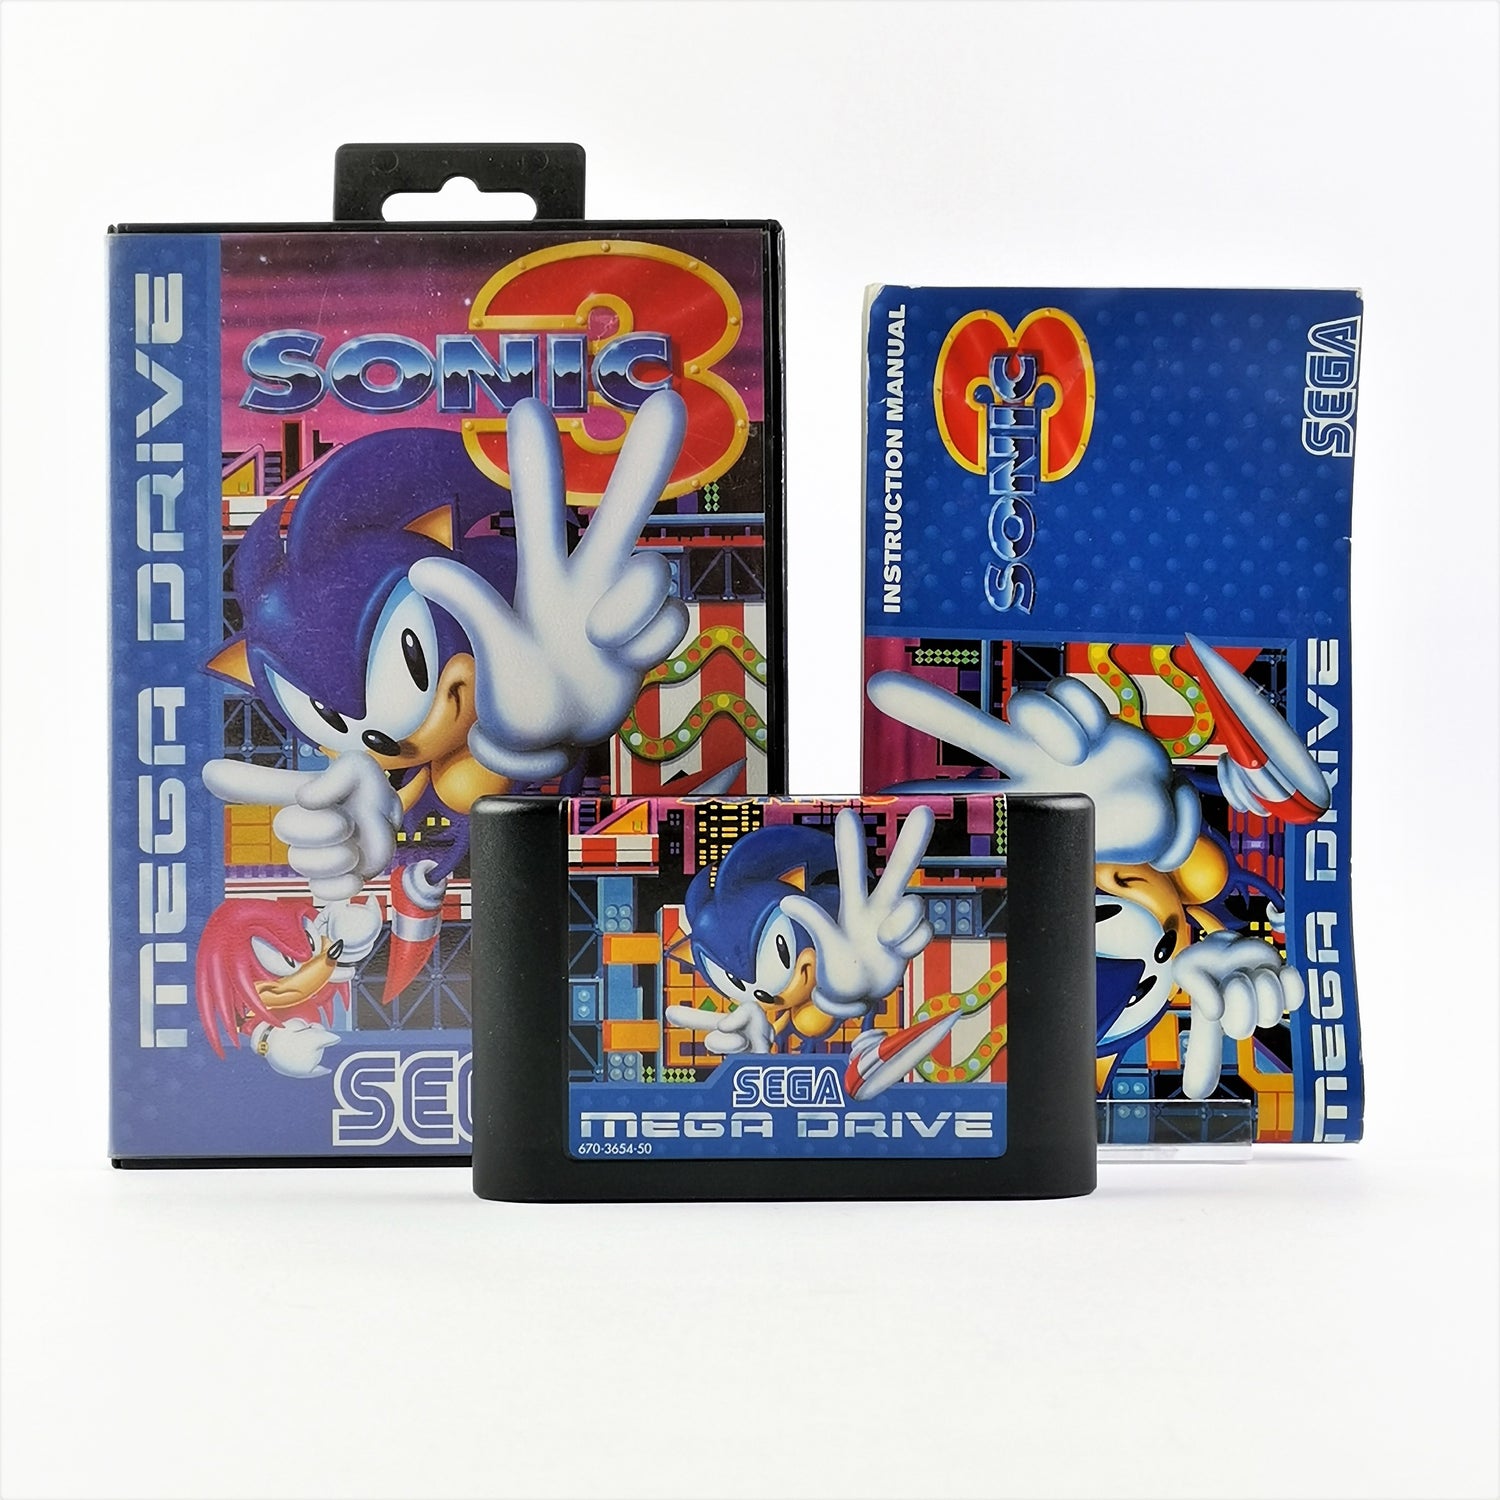 Sega Mega Drive Game: Sonic The Hedgehog 3 - OVP Instructions PAL MD Cartridge